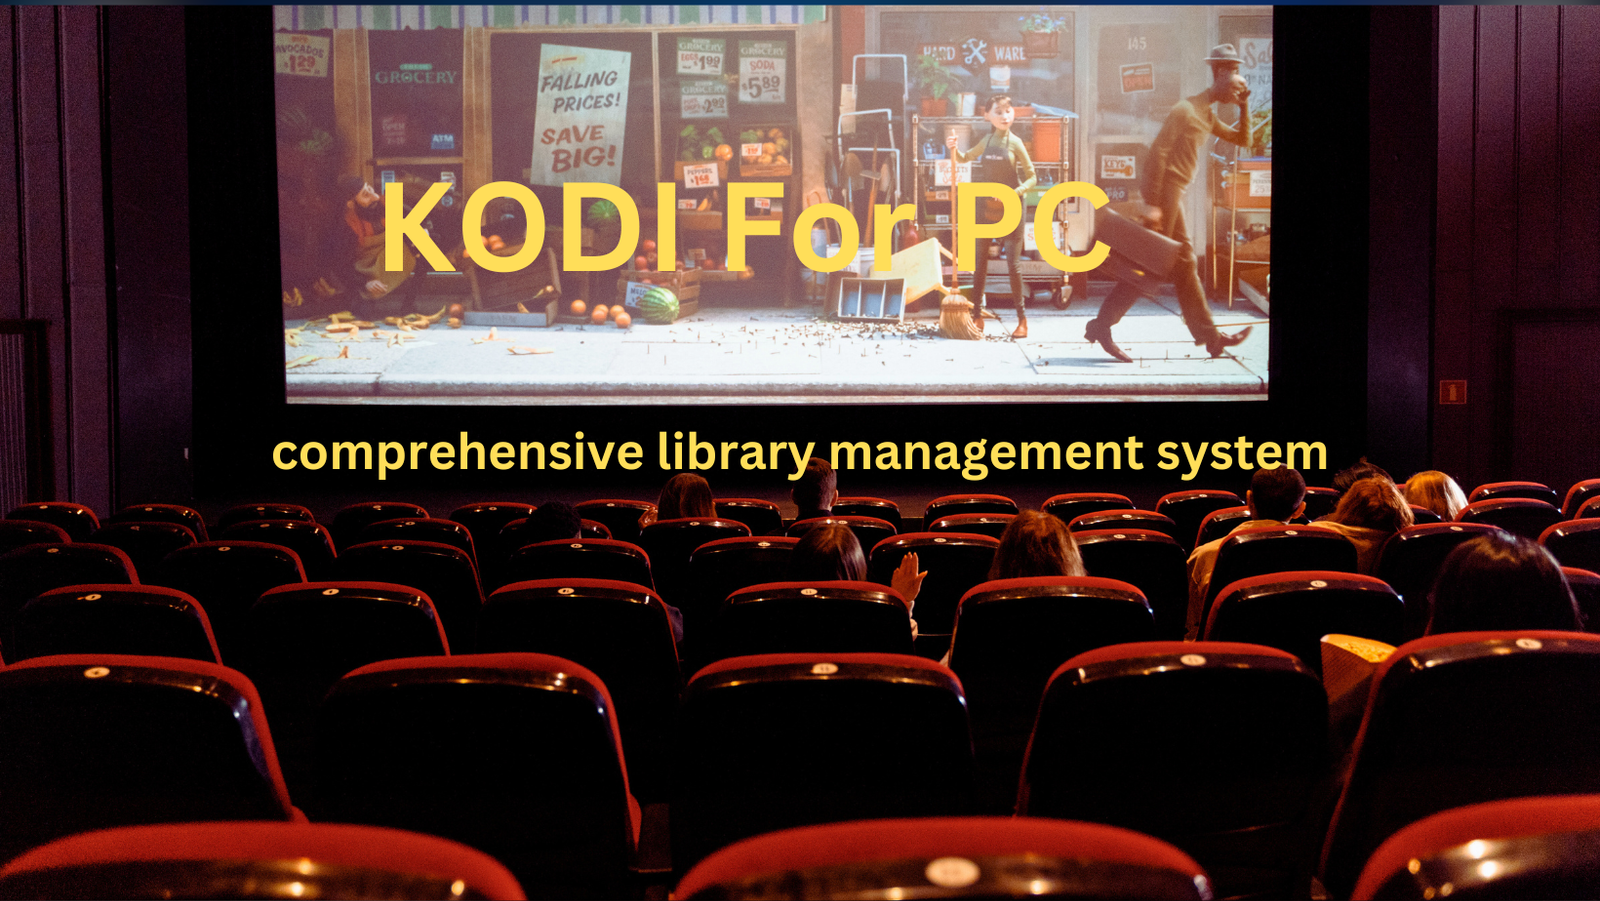 KODI for PC